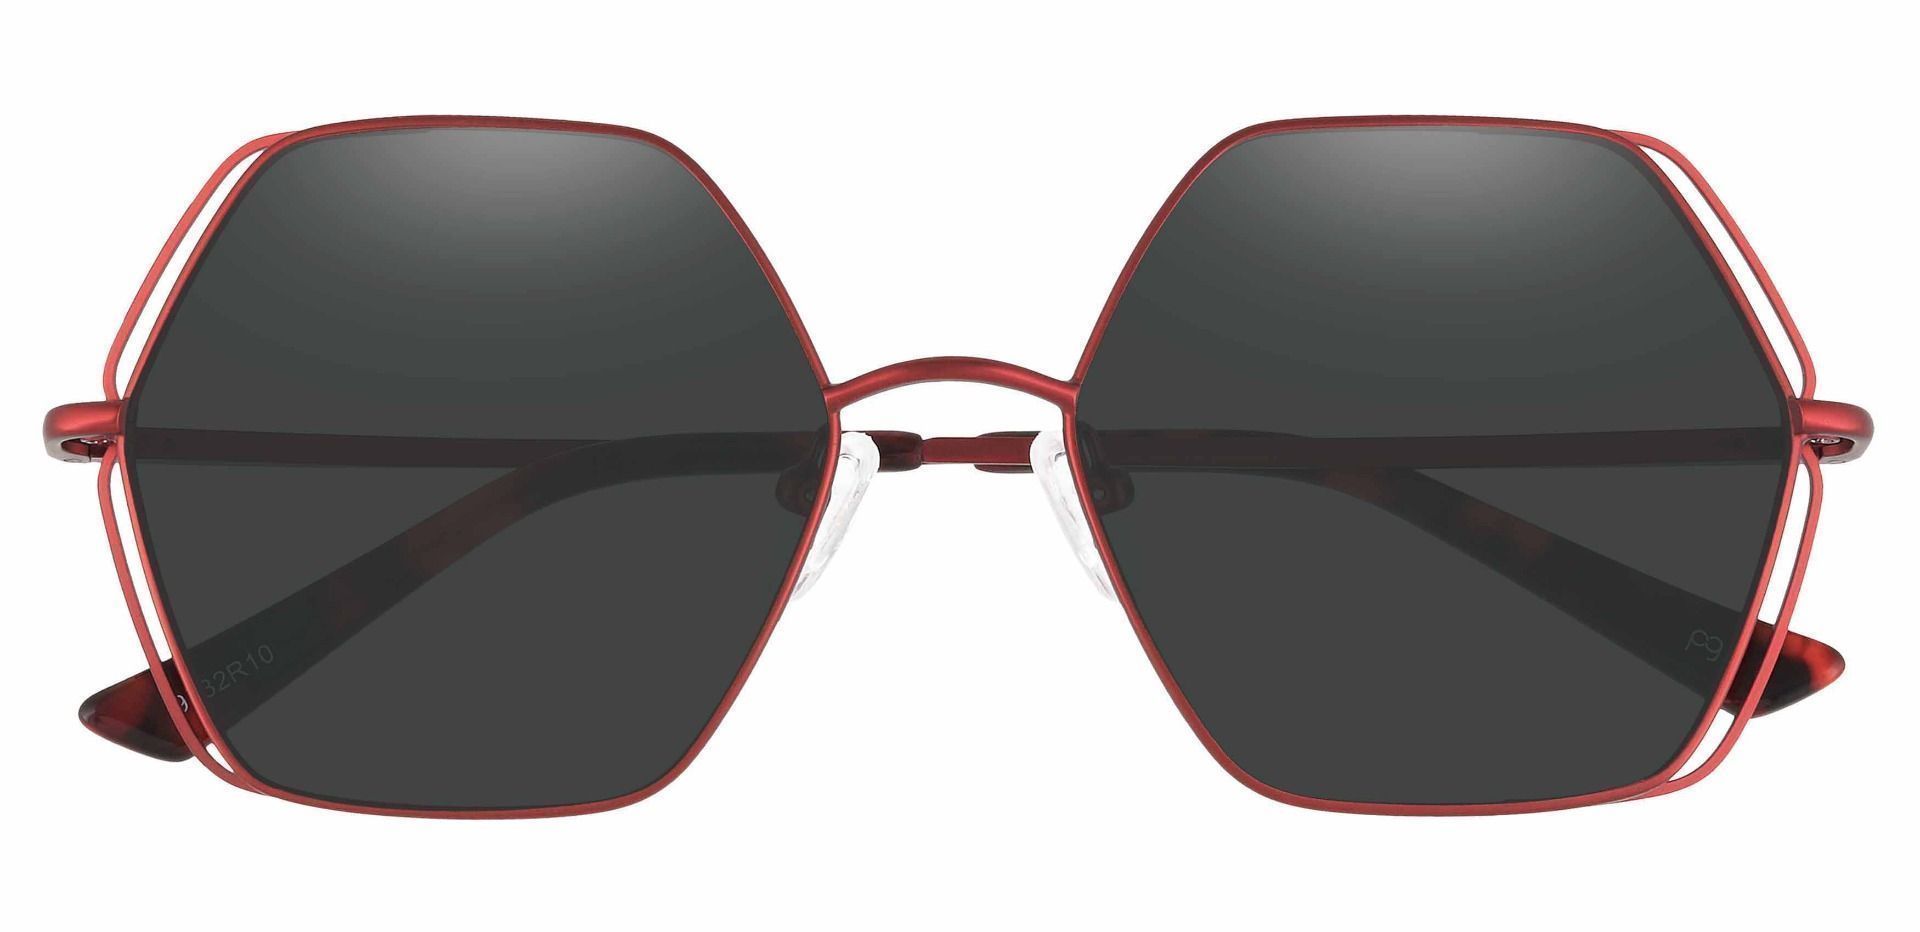 Hawley Geometric Progressive Sunglasses - Red Frame With Gray Lenses